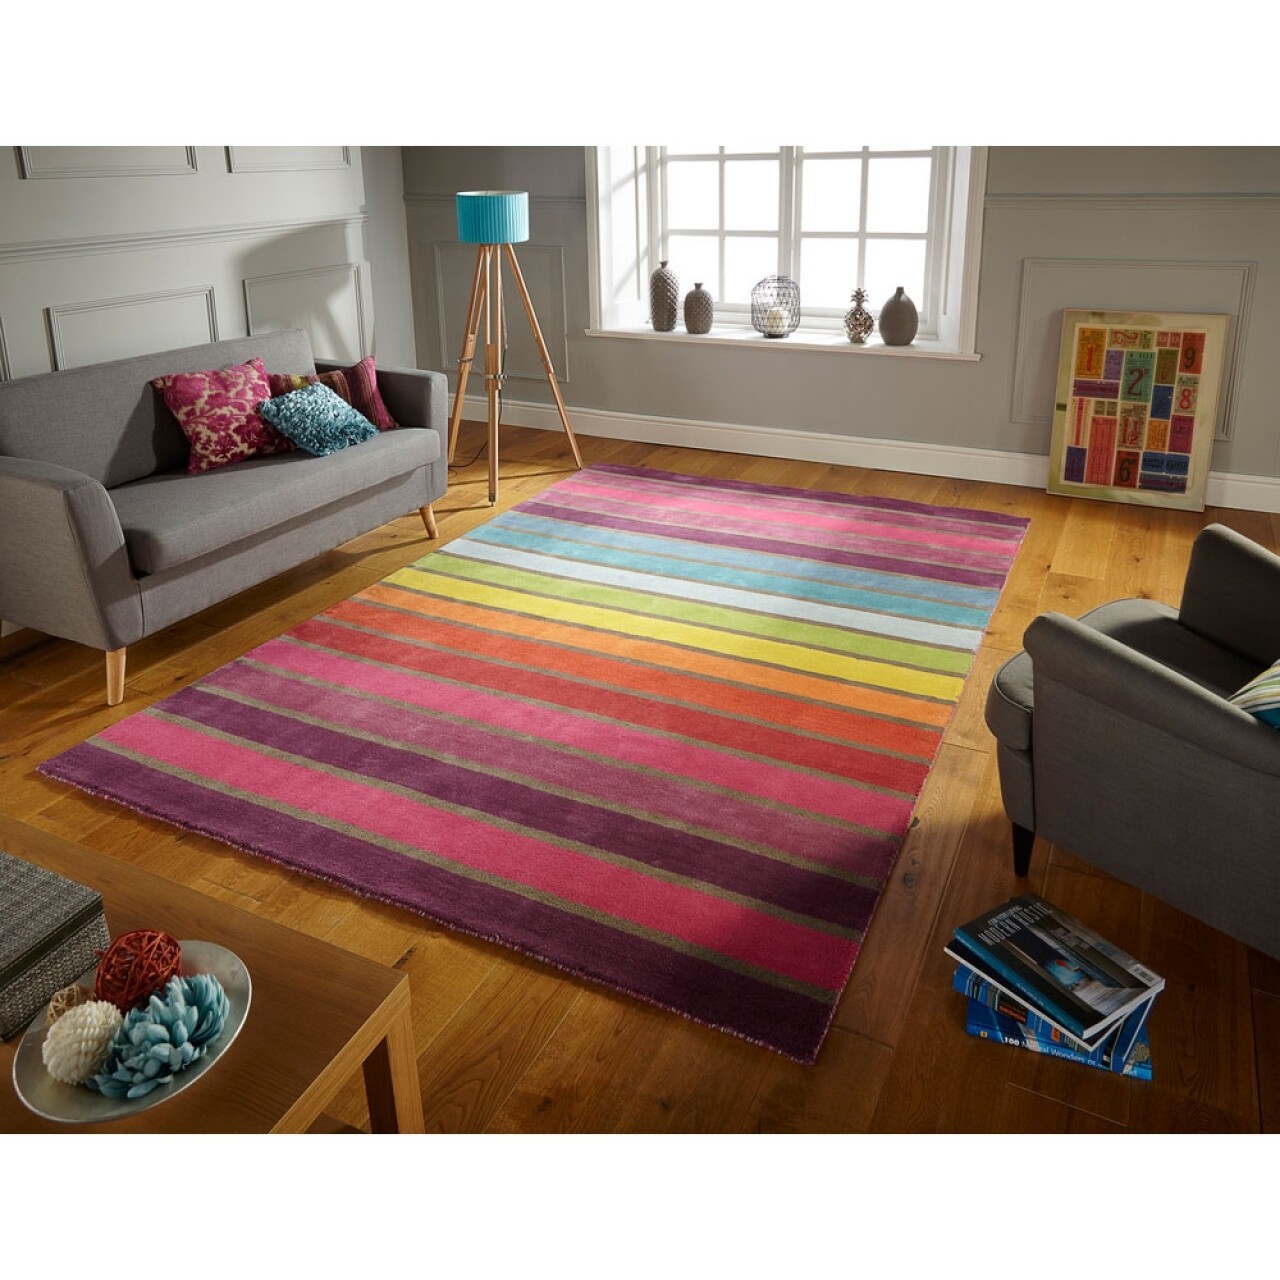 Flair Rugs Ilusion Candy Multi Color szőnyeg, Flair Szőnyegek, 120 x 170 cm, 100% gyapjú, sokszínű